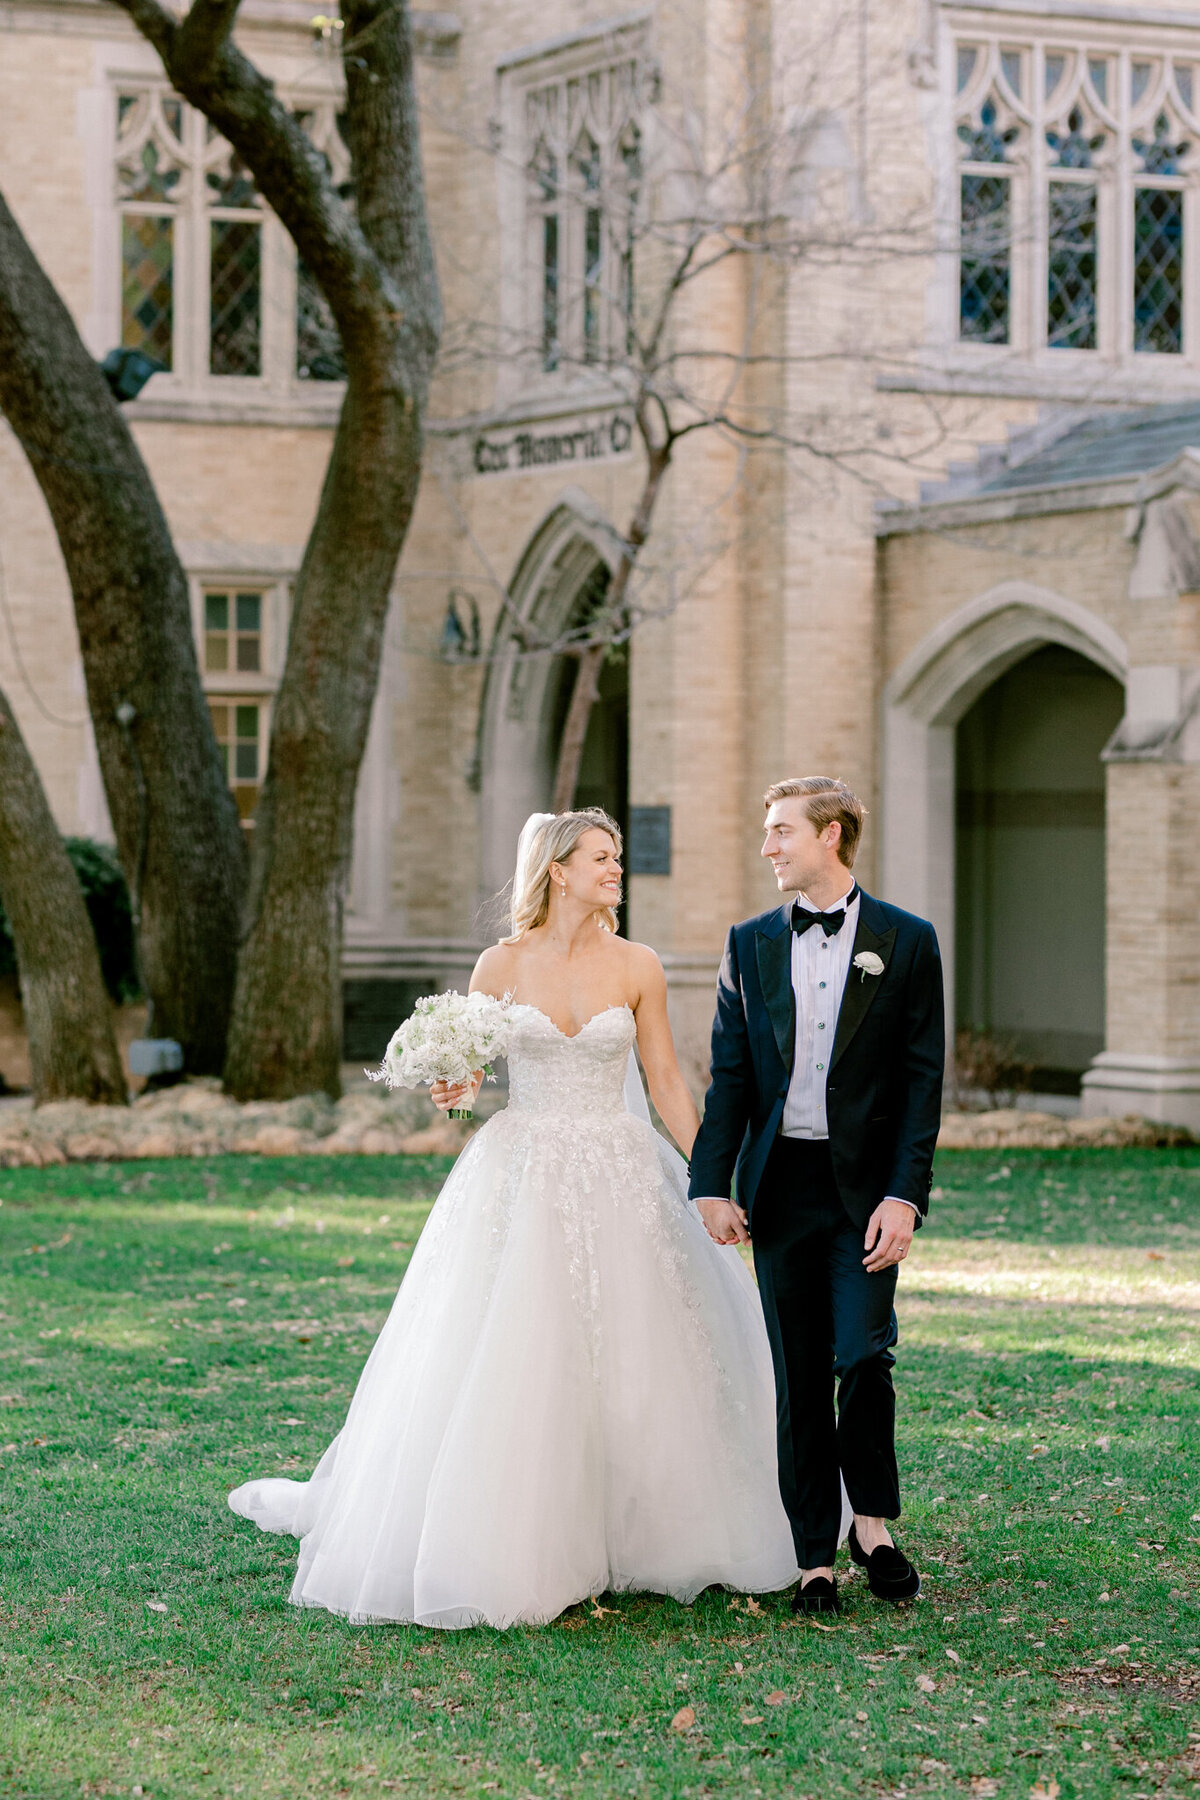 Shelby & Thomas's Wedding at HPUMC The Room on Main | Dallas Wedding Photographer | Sami Kathryn Photography-4